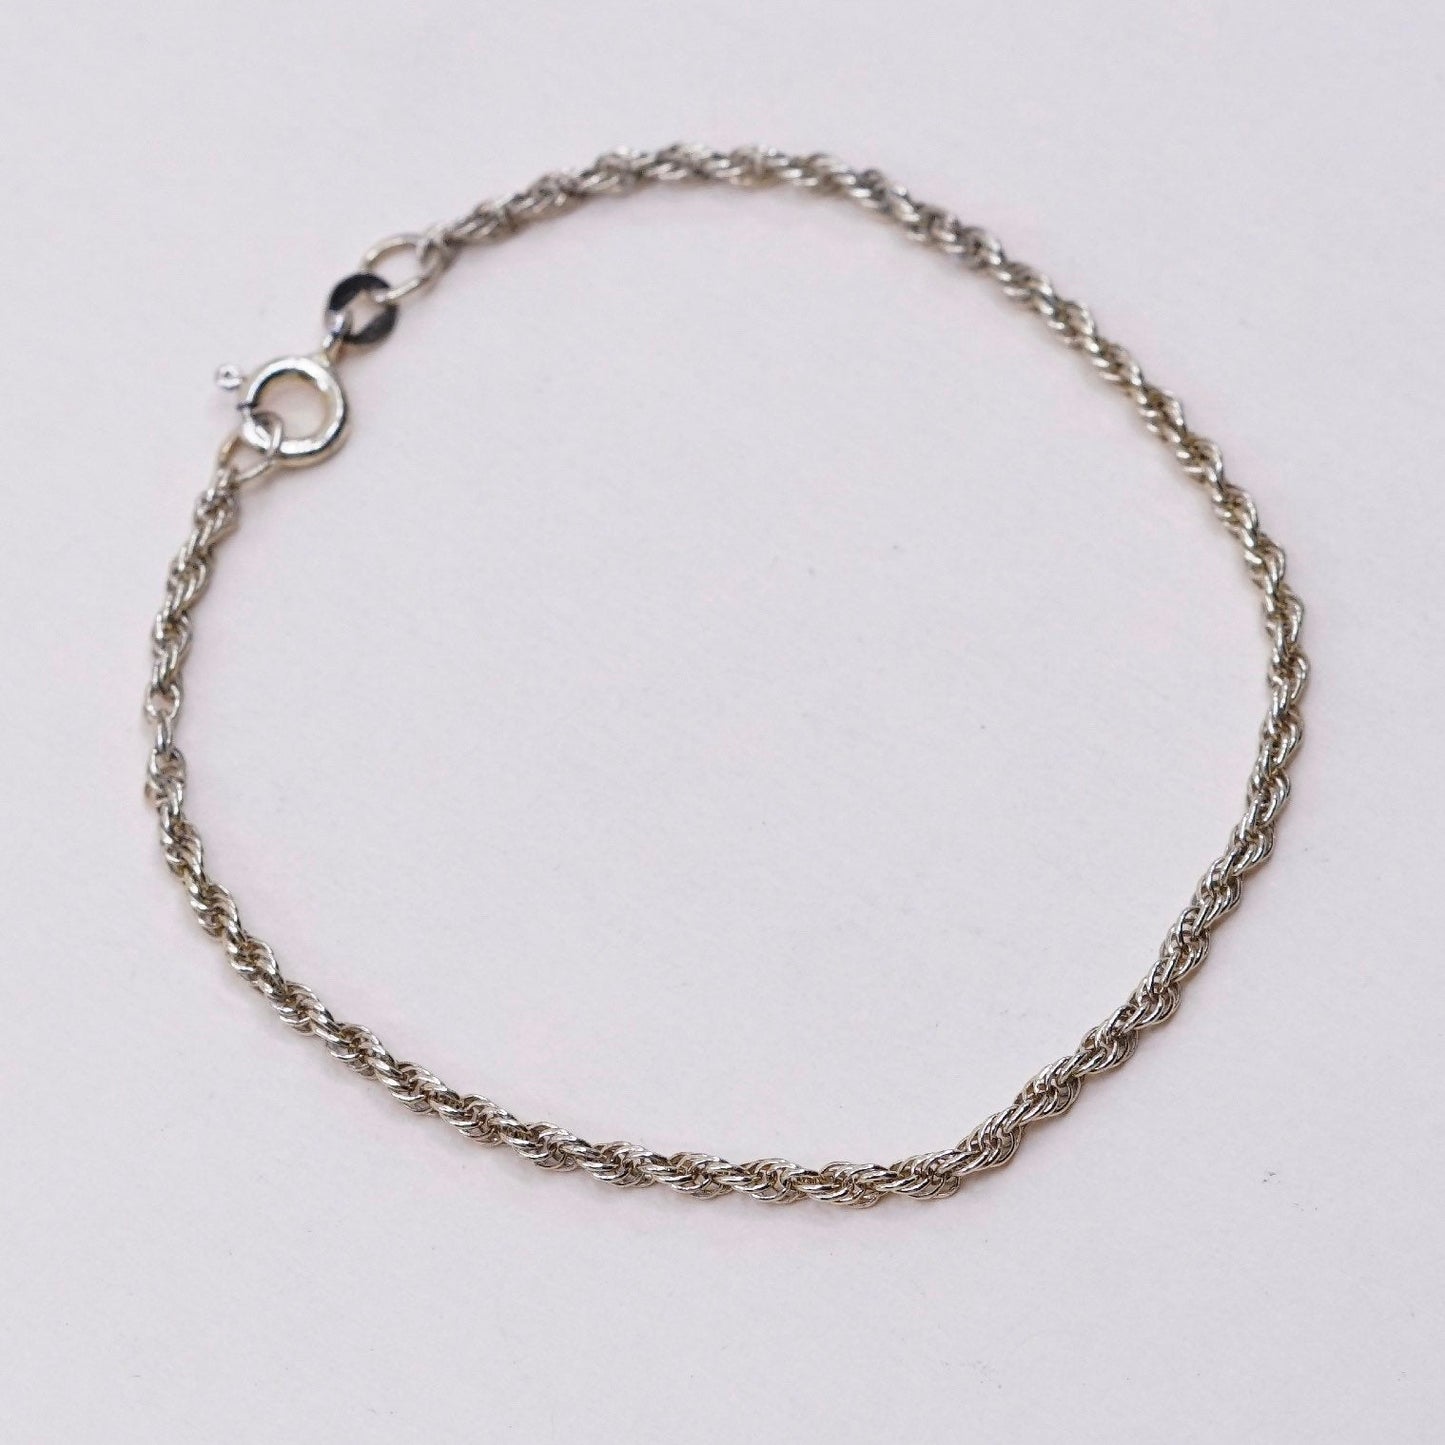 7.25”, Vintage vermeil gold over sterling 925 silver Canada rope chain bracelet